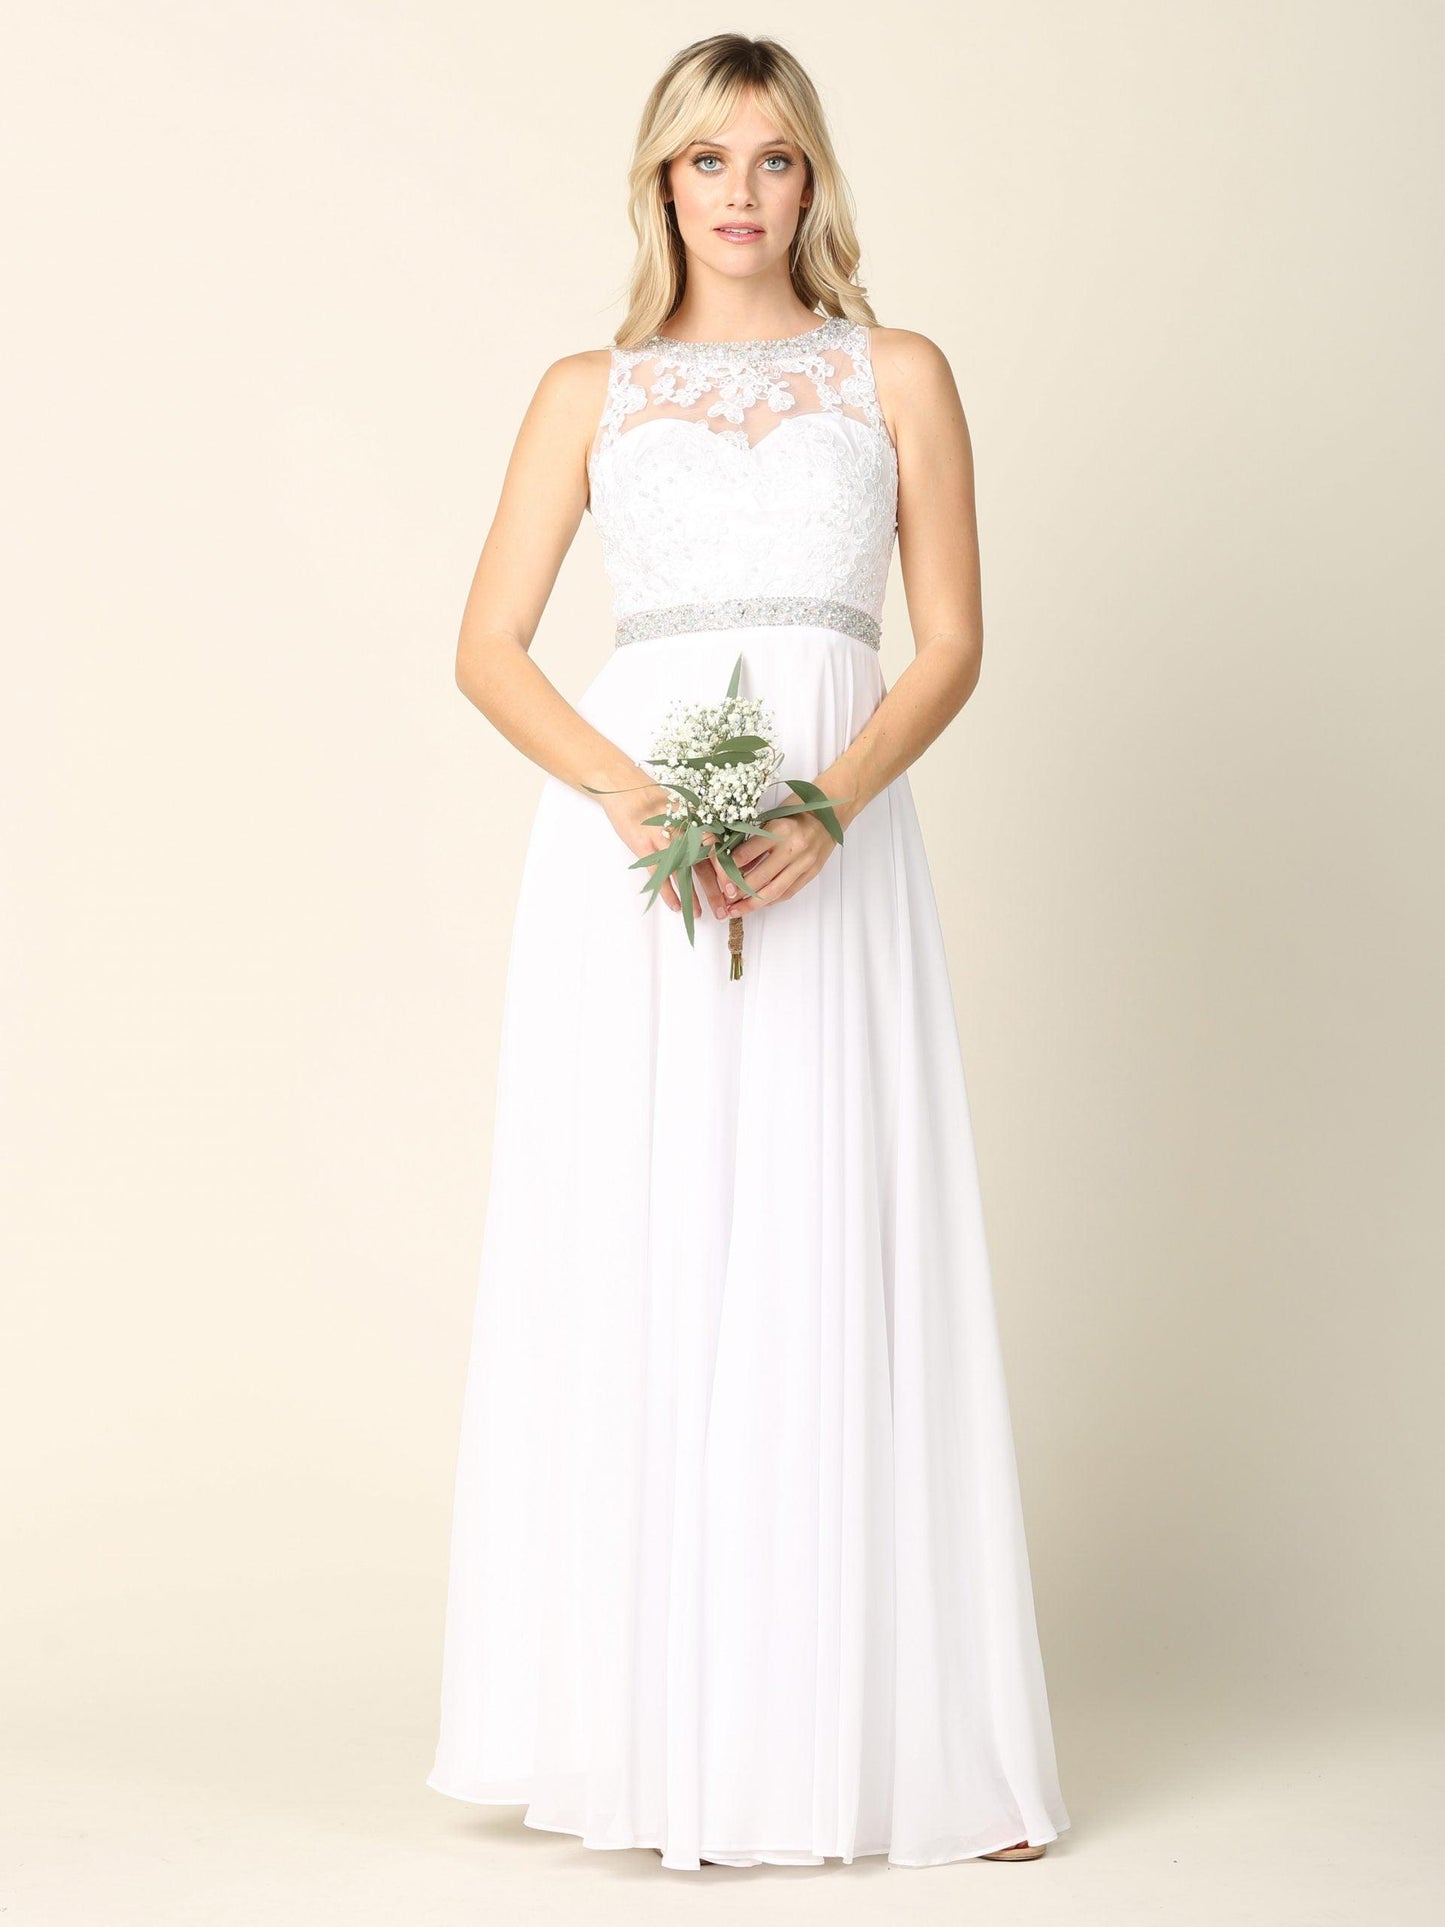 Bridal Long Sleeveless Wedding Dress - The Dress Outlet